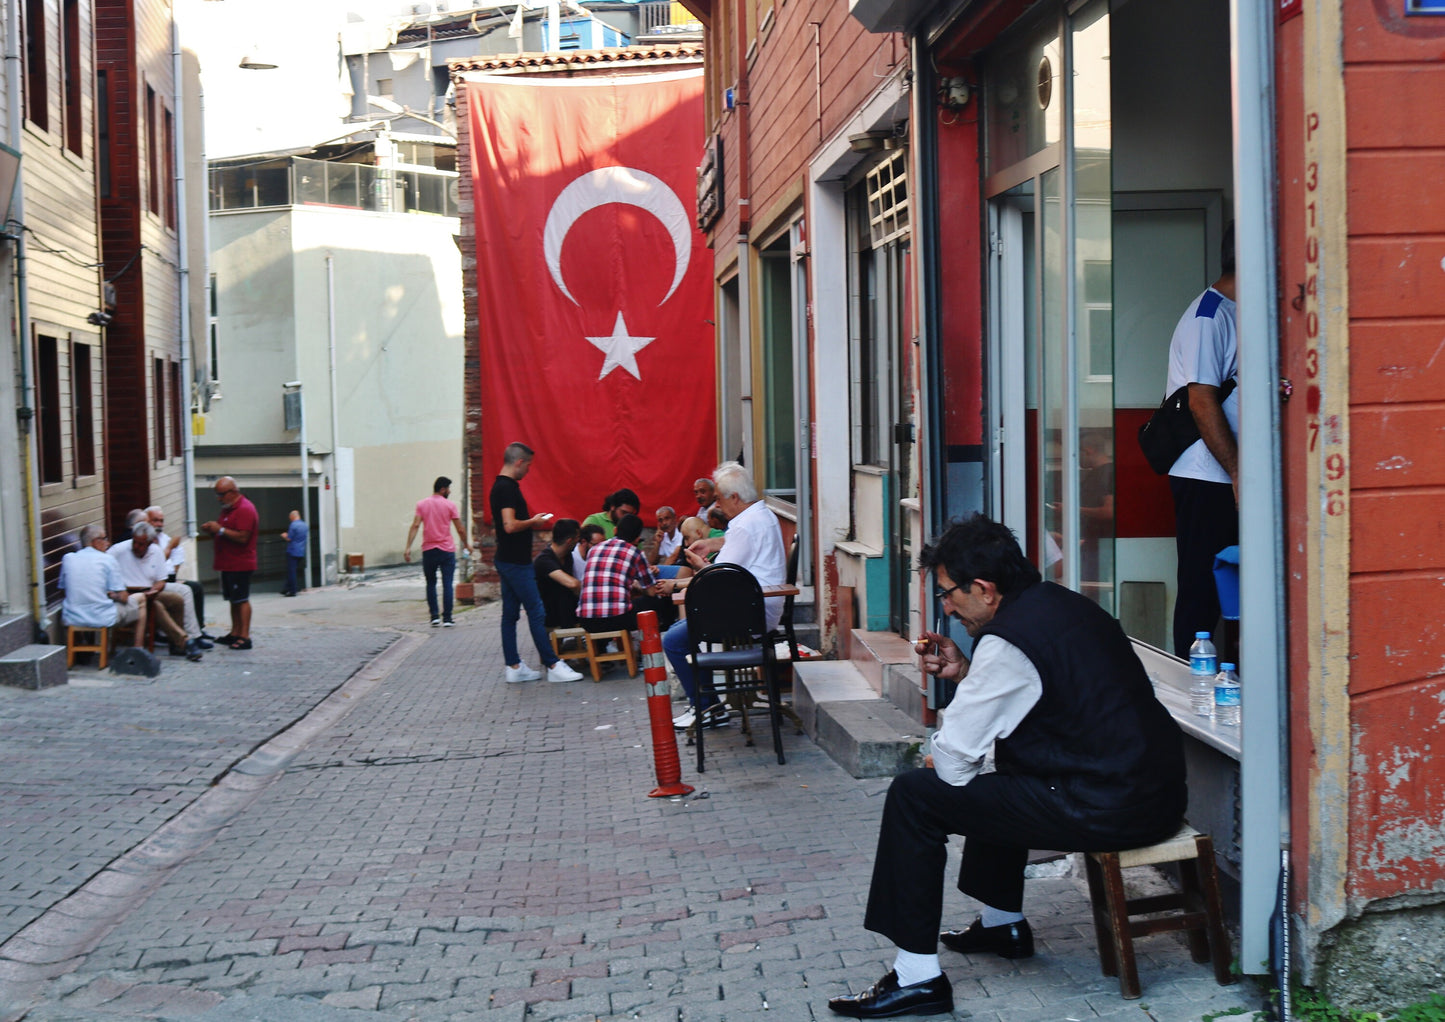 Turkey Decor Istanbul Uskudar Turkish Street Photography Print